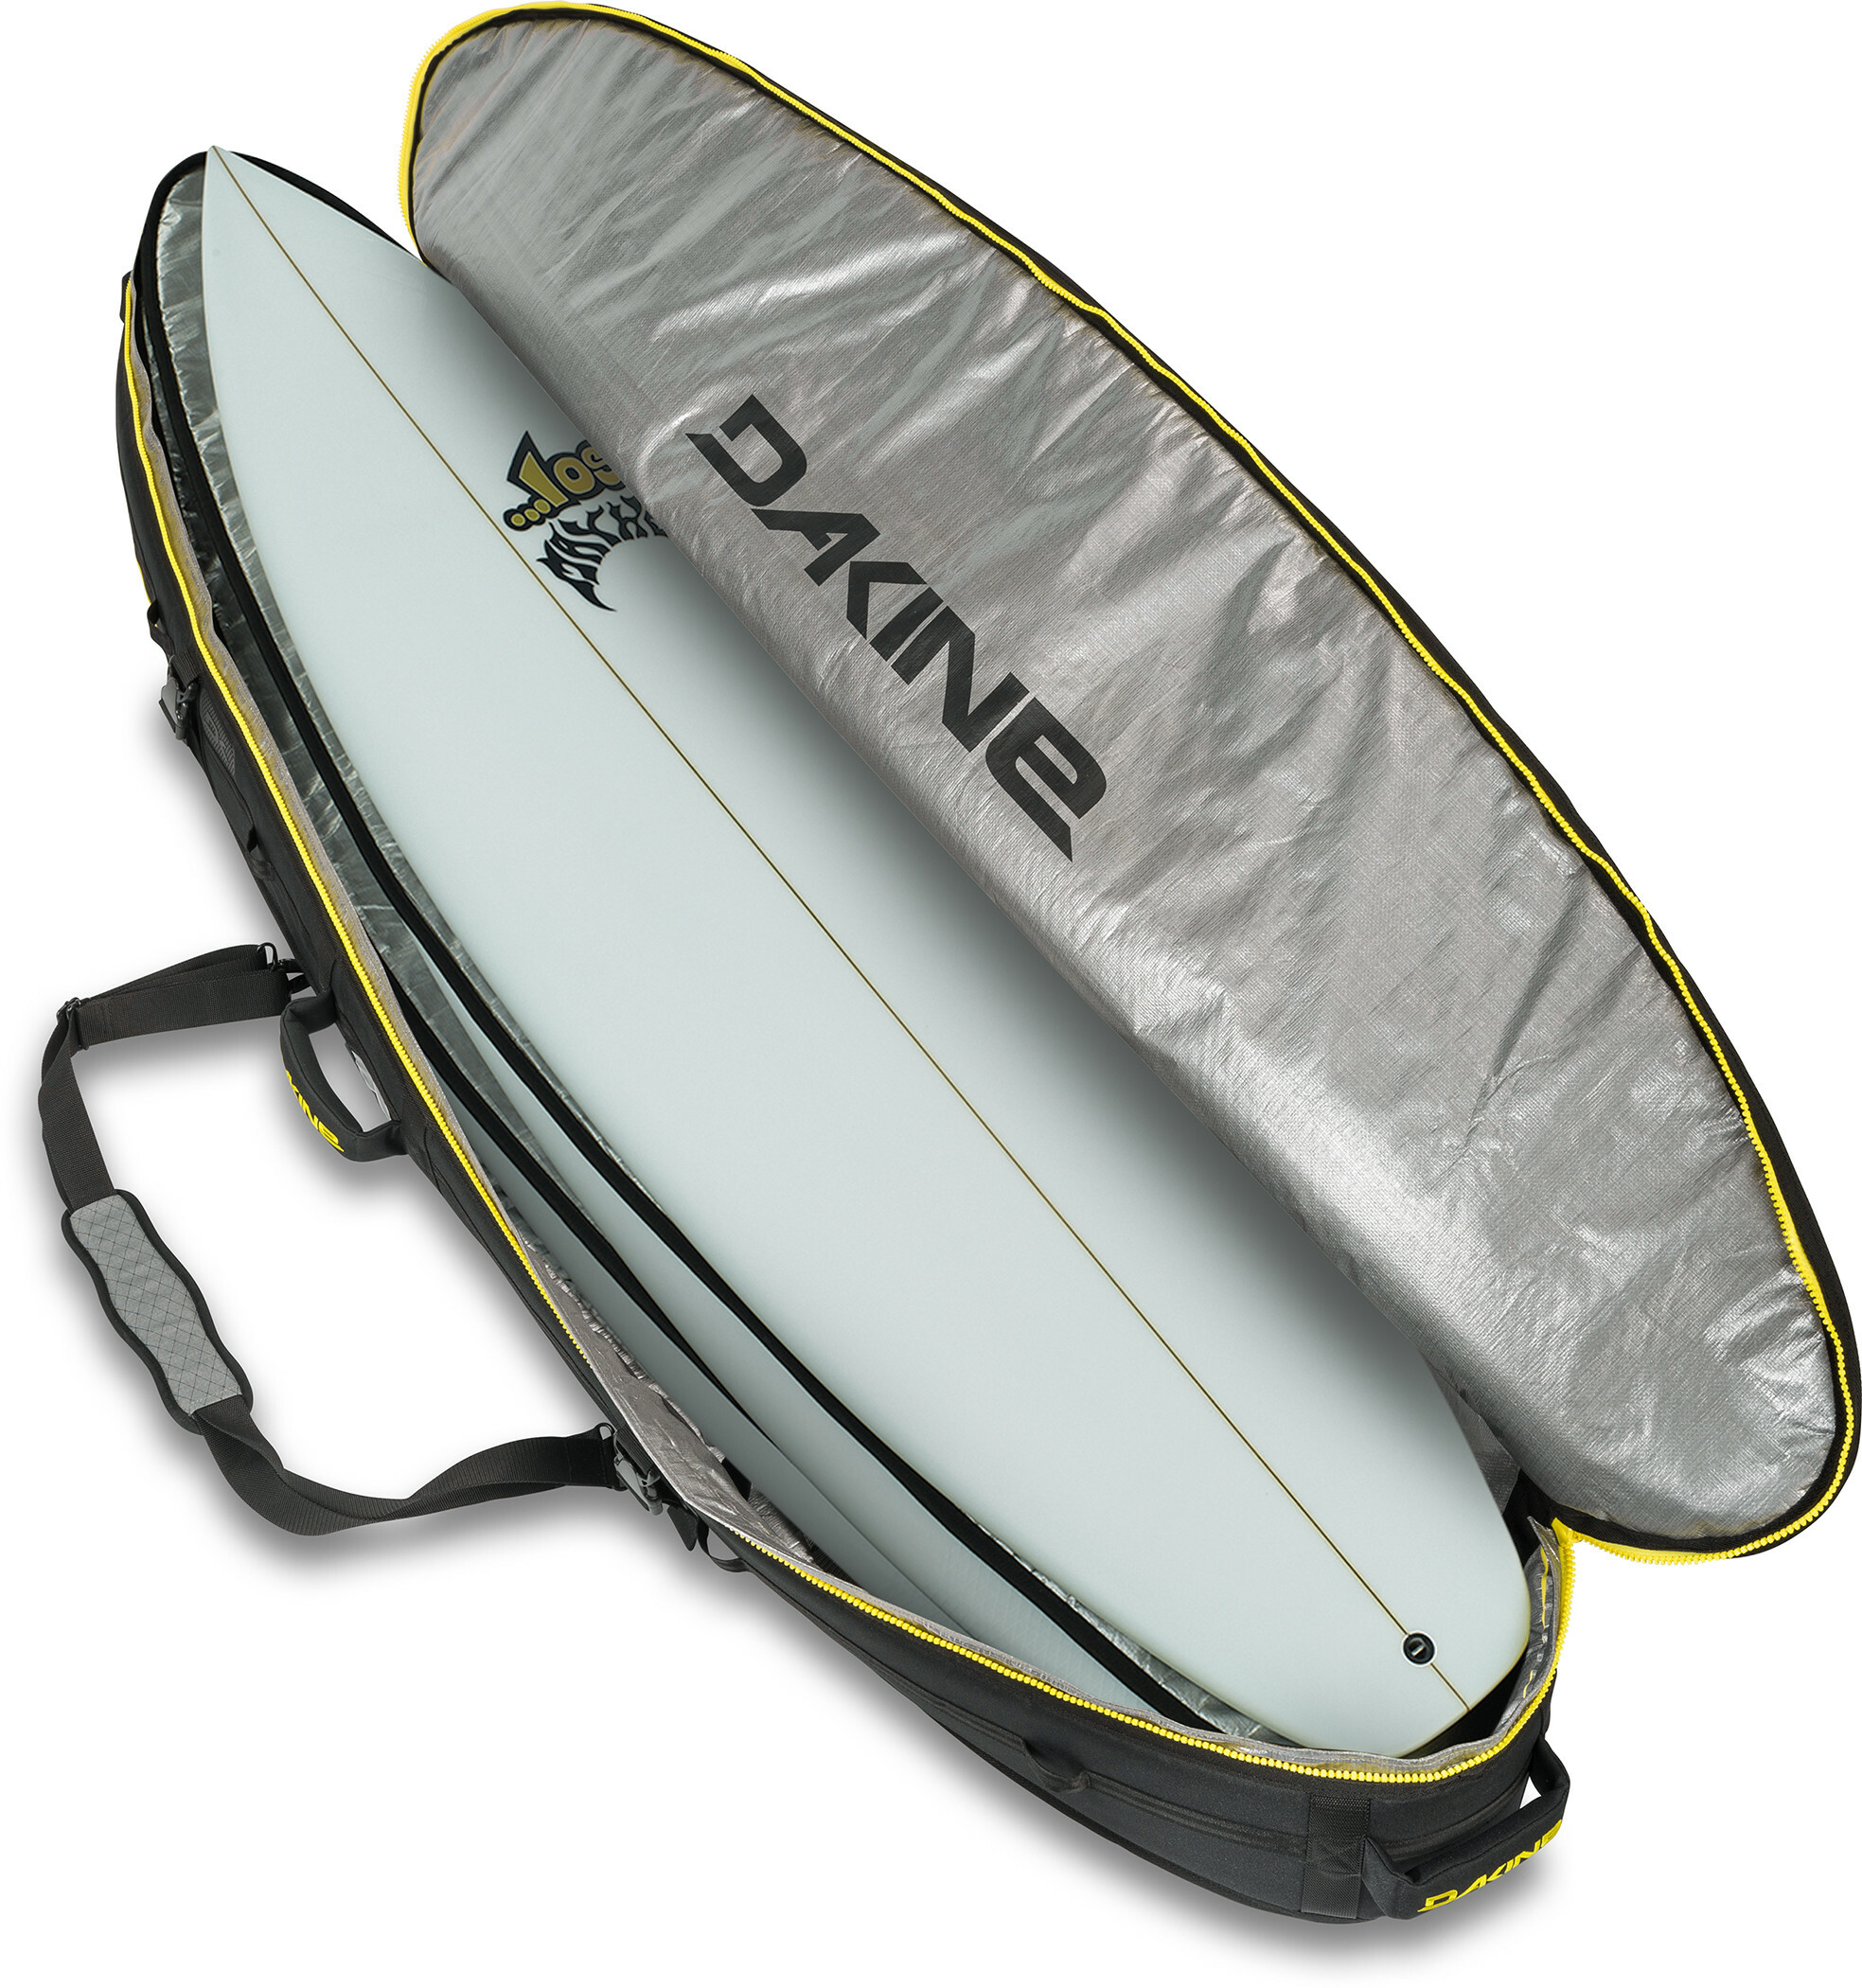 Regulator Surfboard Bag - Triple